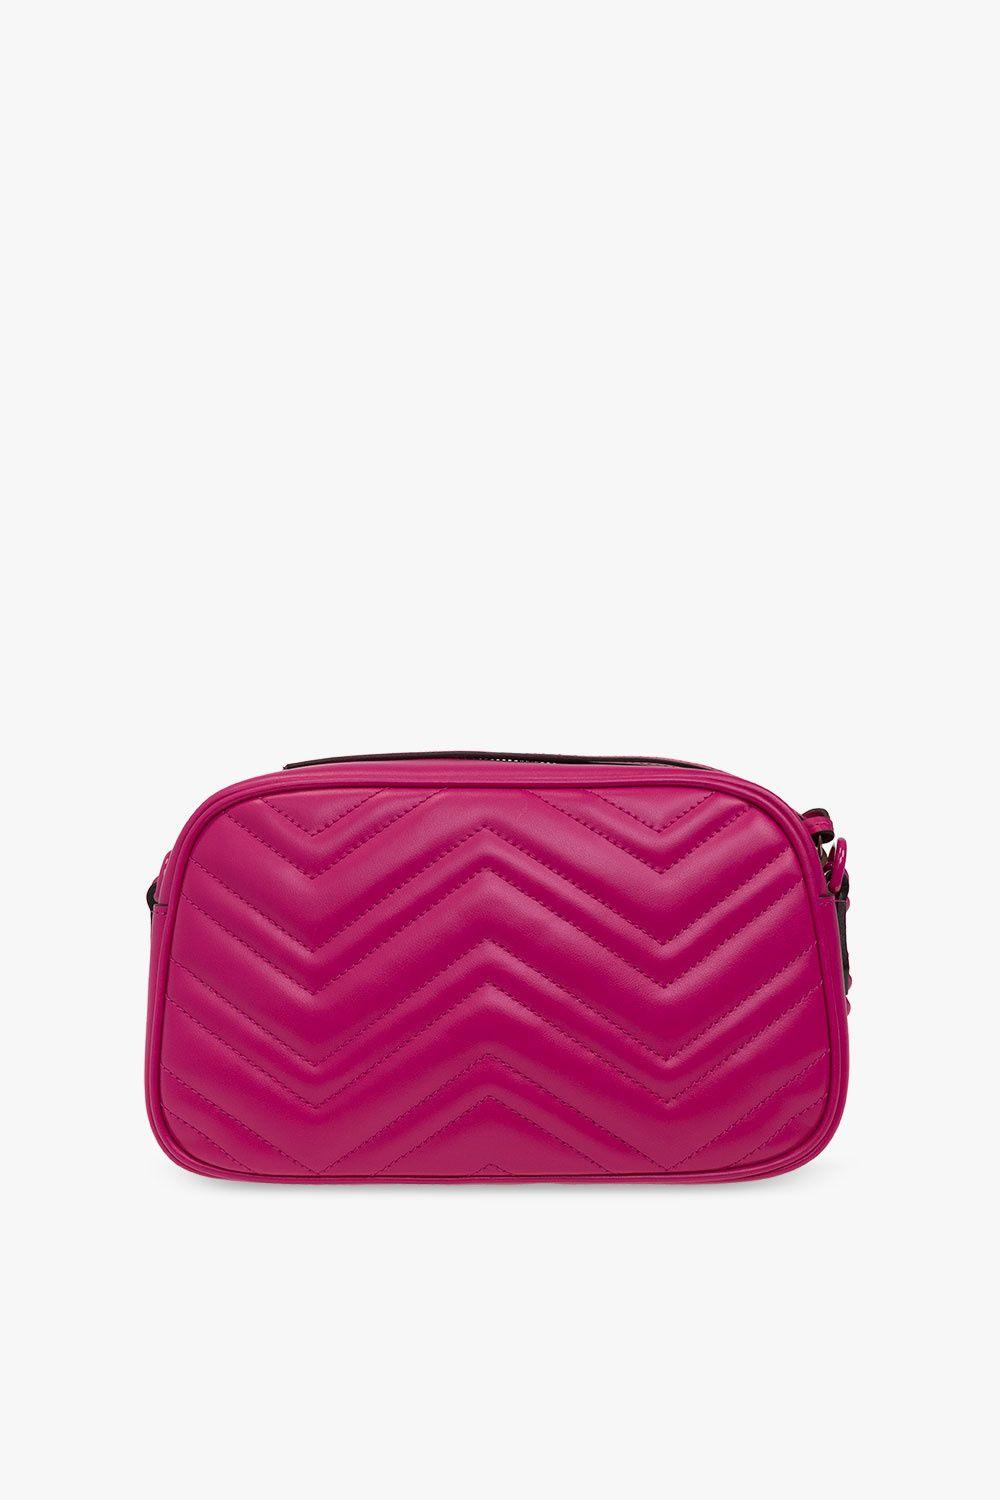 Gucci Pink Leather Marmont Matelassé Shoulder Bag Small QFB1BILTPH006